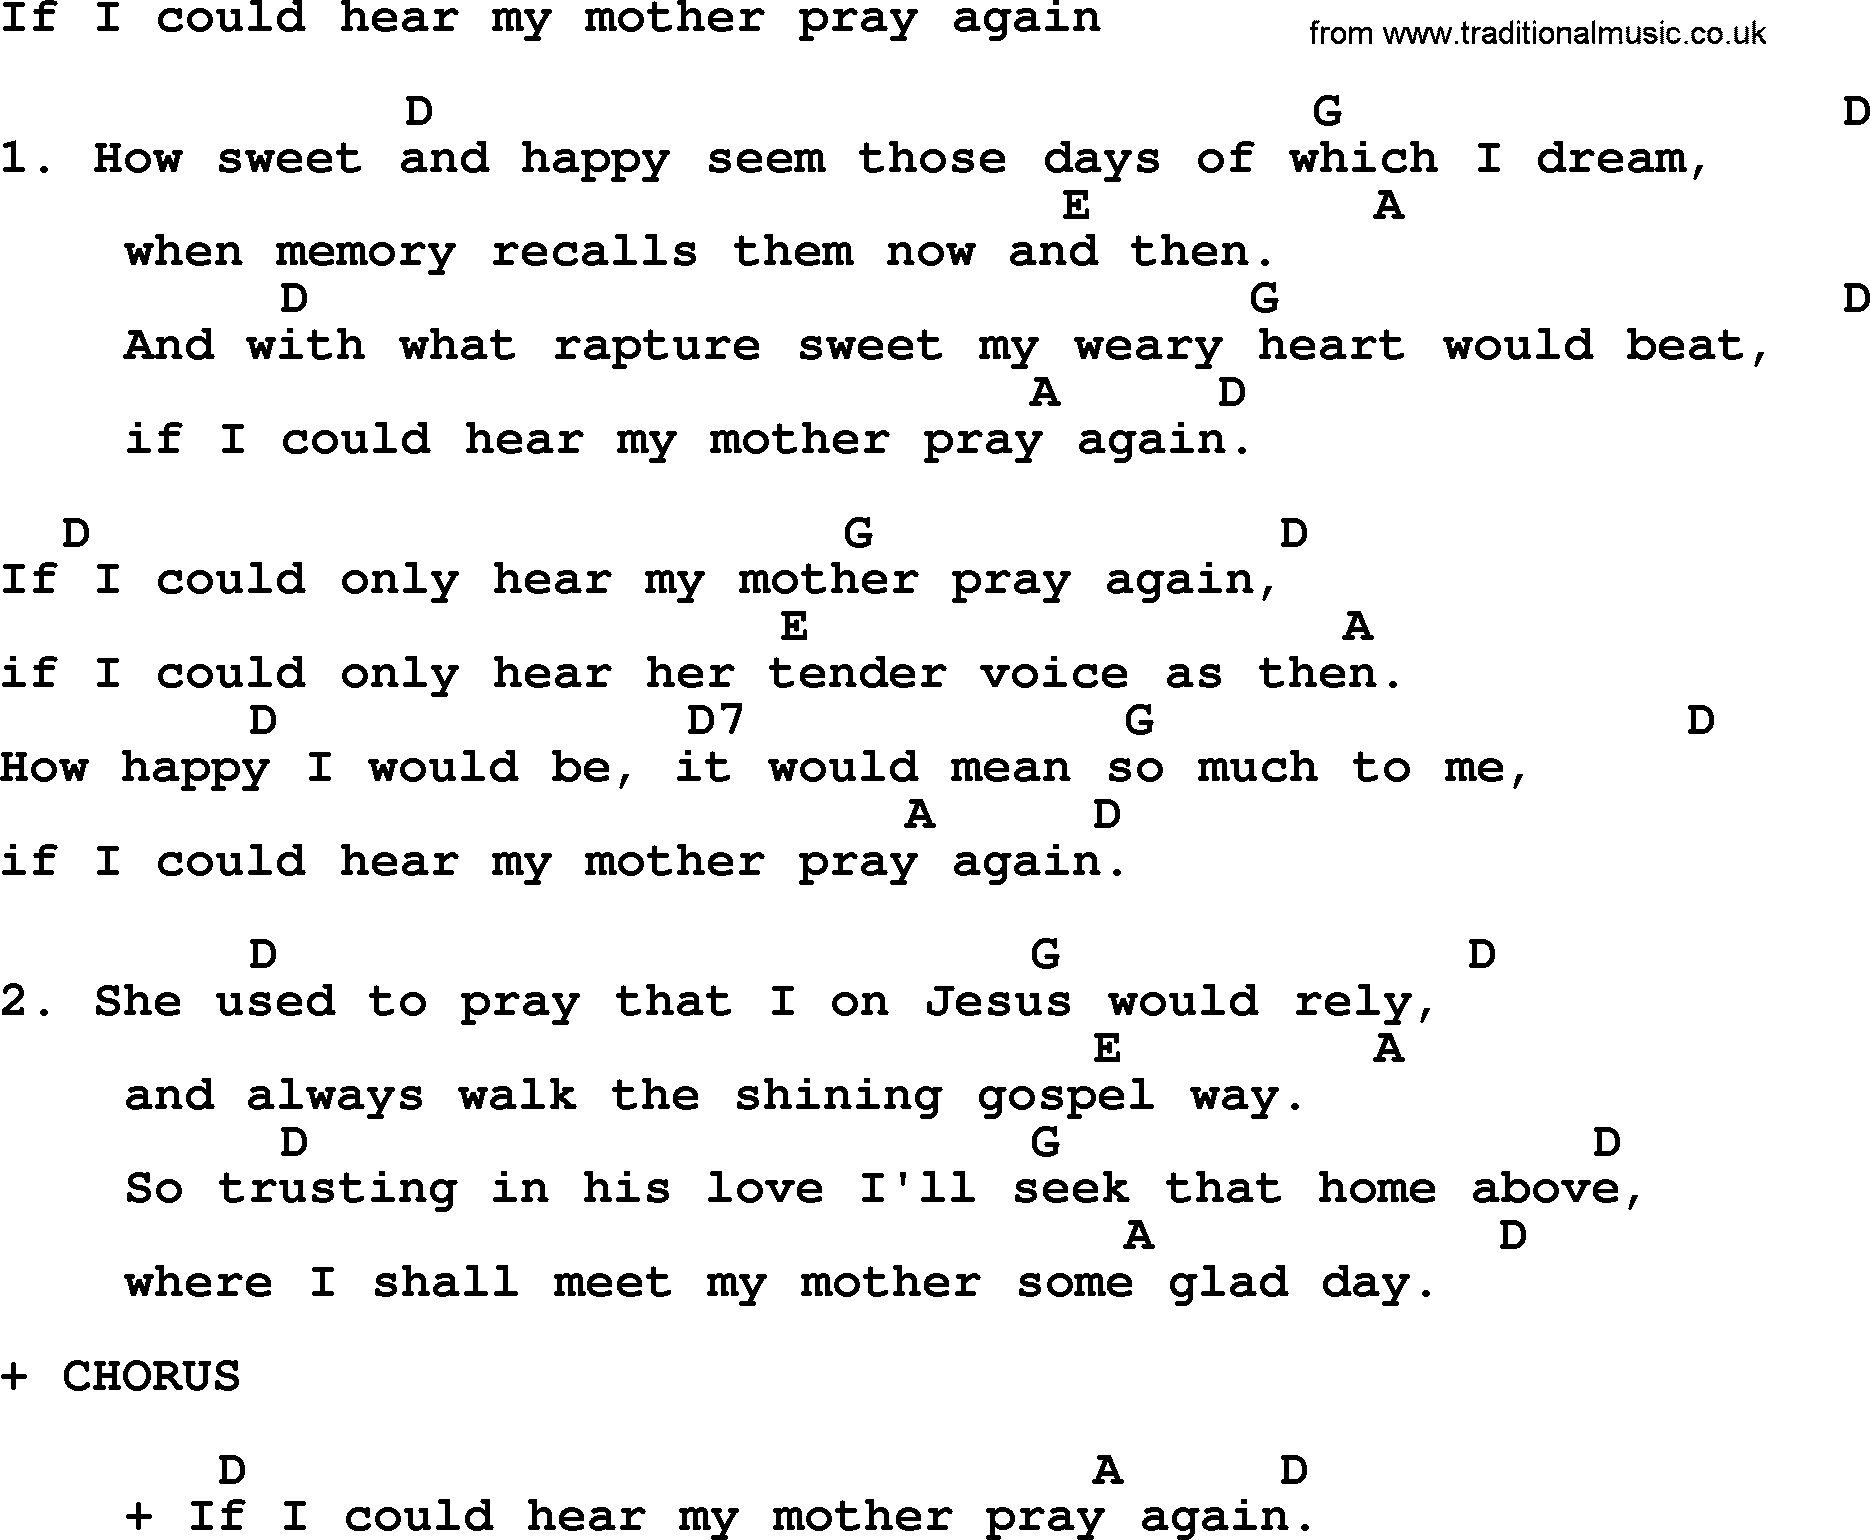 Loretta Lynn song: If I Could Hear My Mother Pray Again lyrics and chords